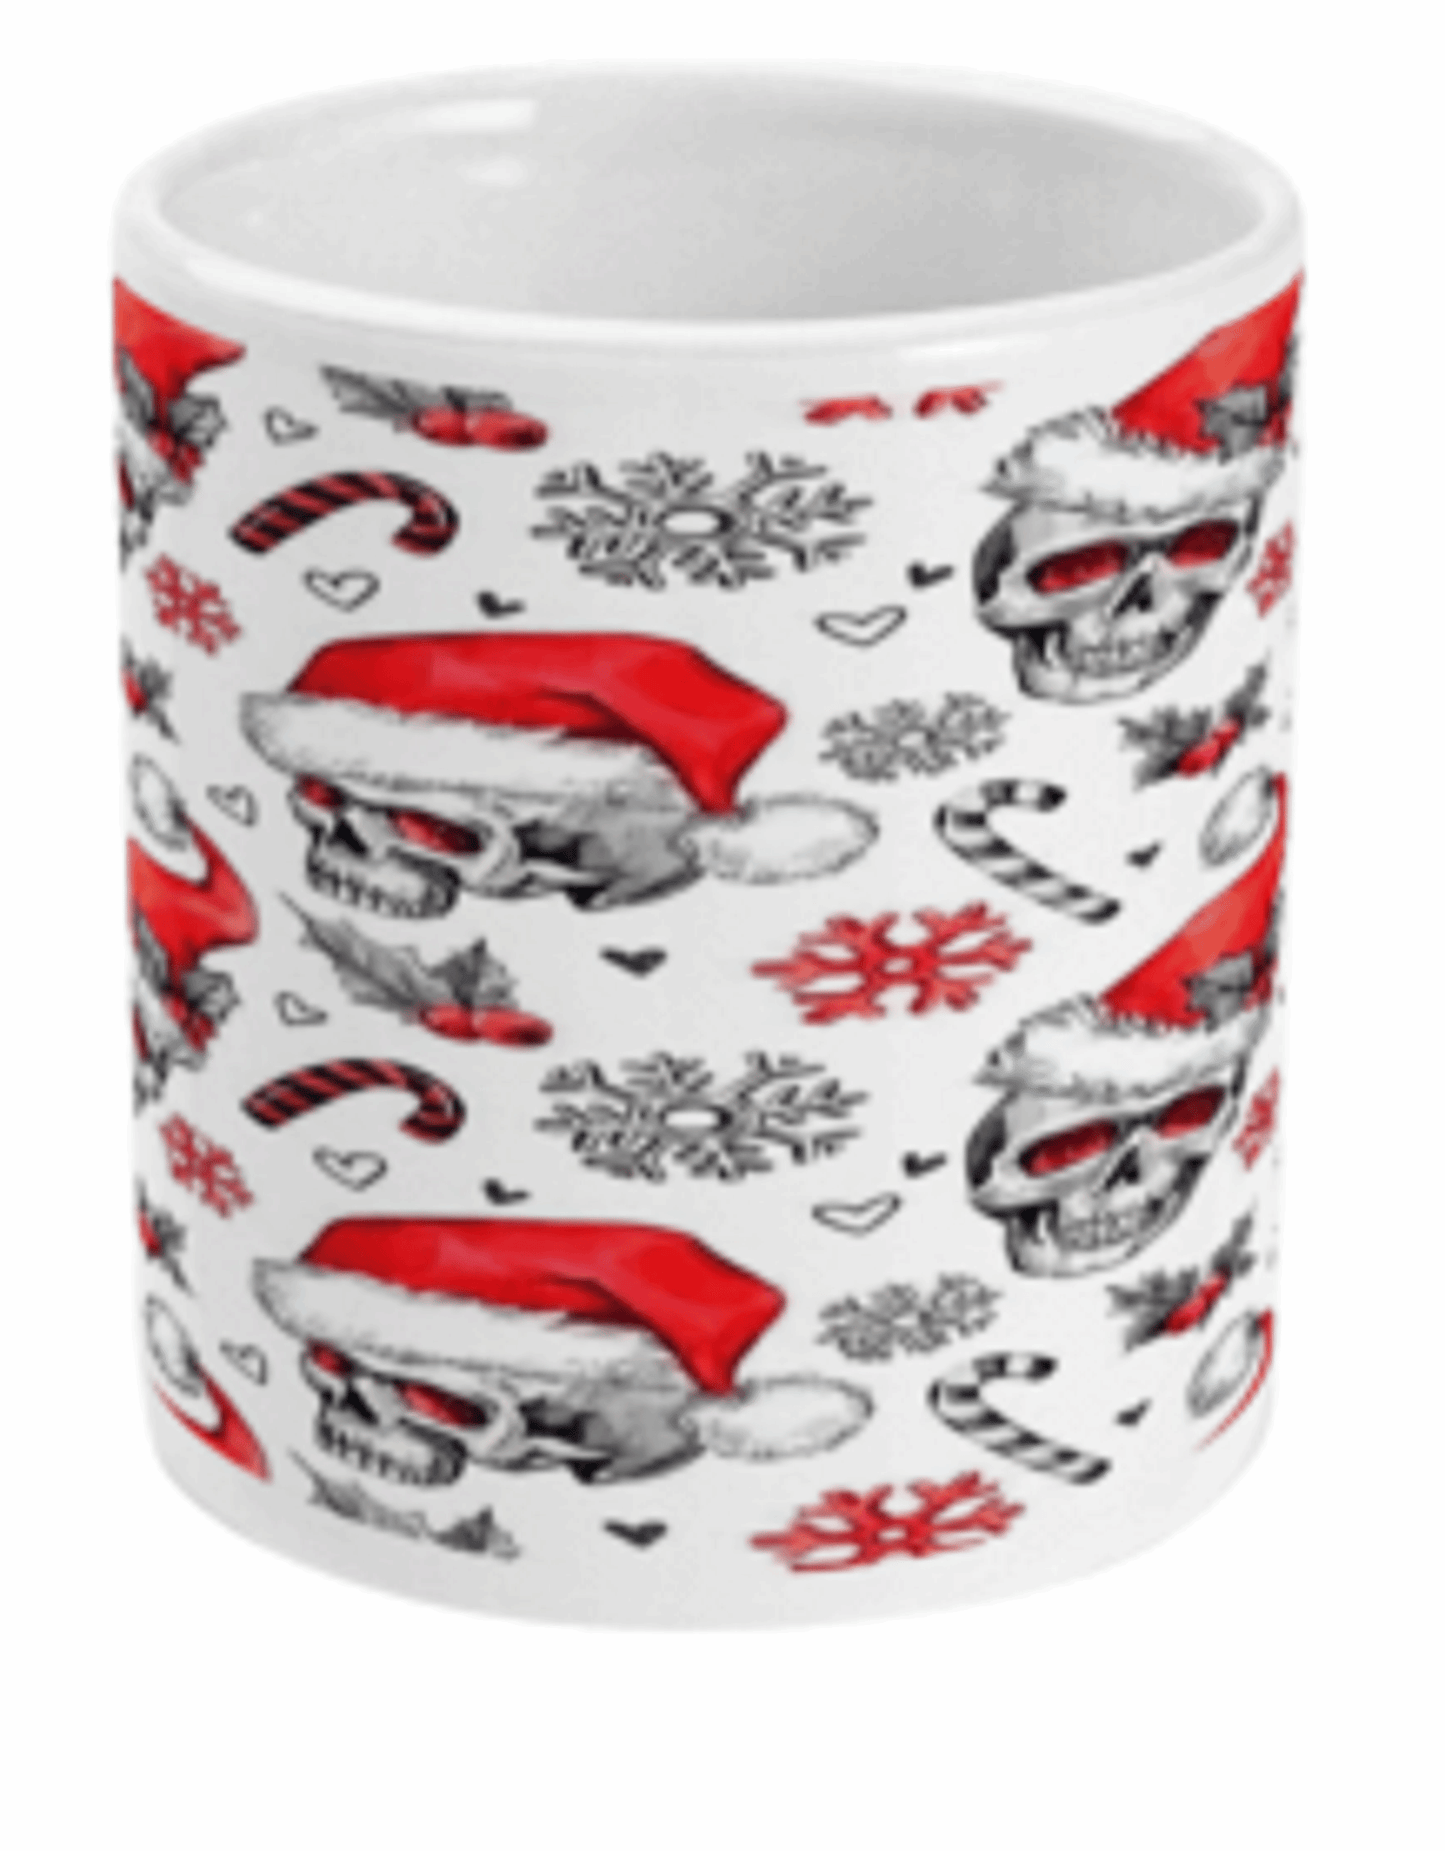  Skull Father Christmas Coffee Mug by Free Spirit Accessories sold by Free Spirit Accessories